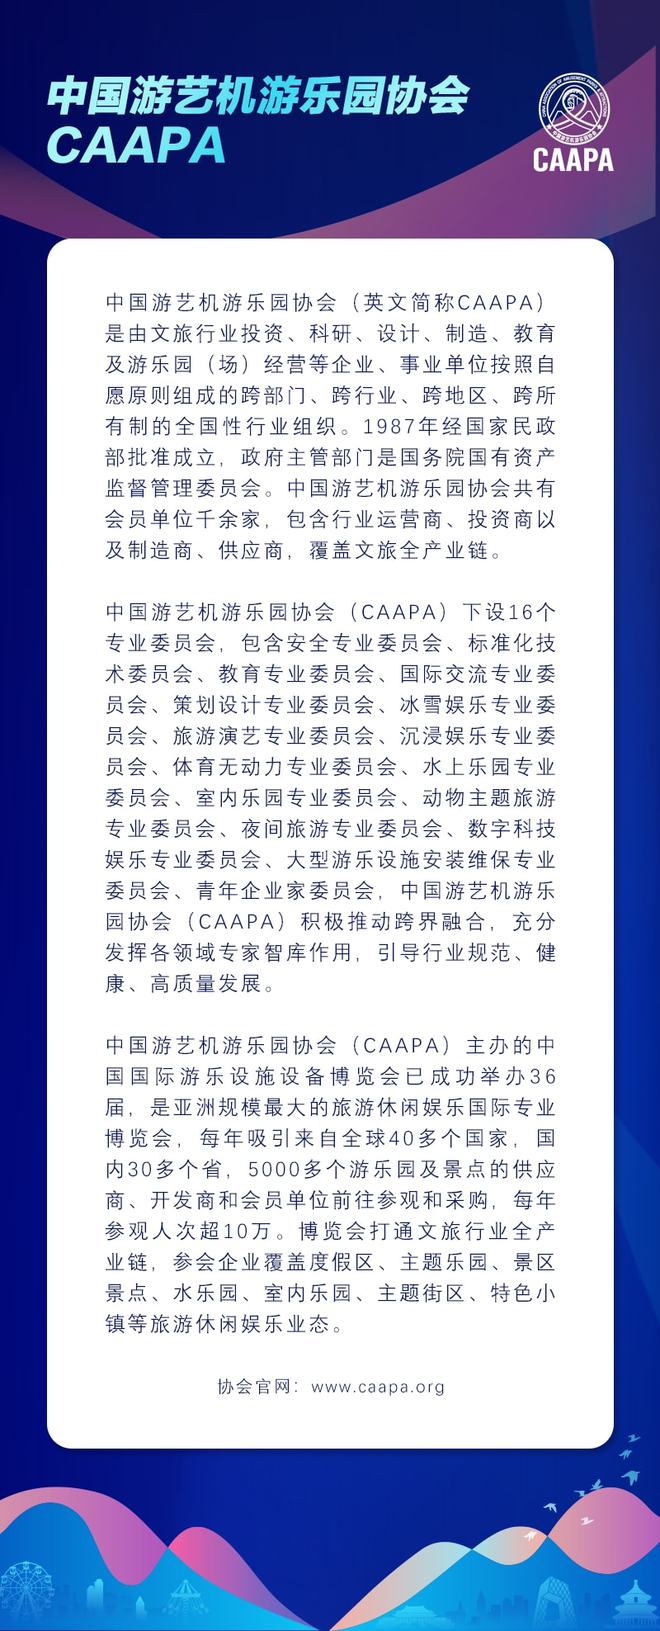 CAAPA会员资讯:海昌海洋公园与香港海洋公园合作